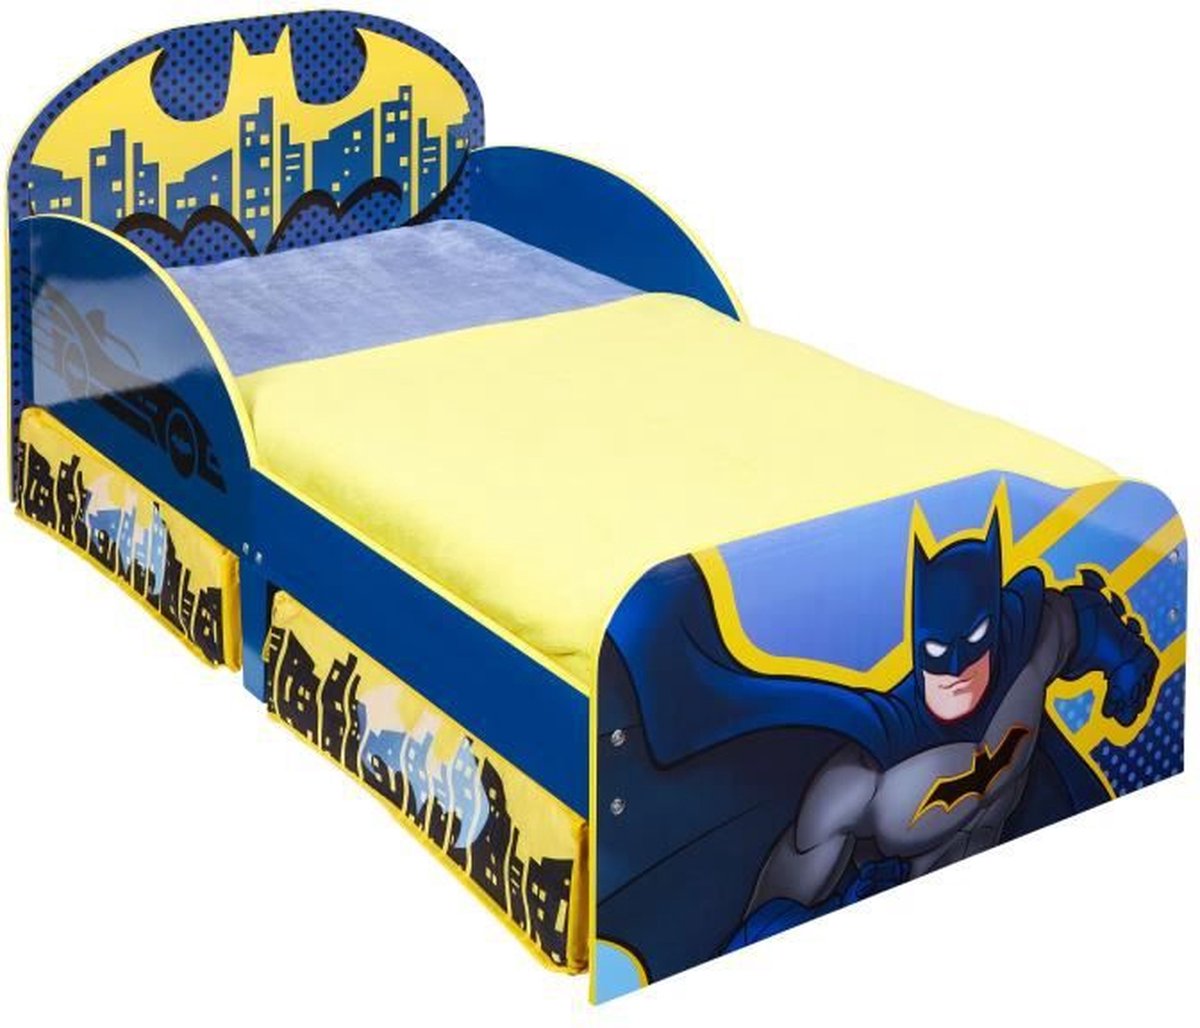 Batman Bed Kind: 145x77x64 cm